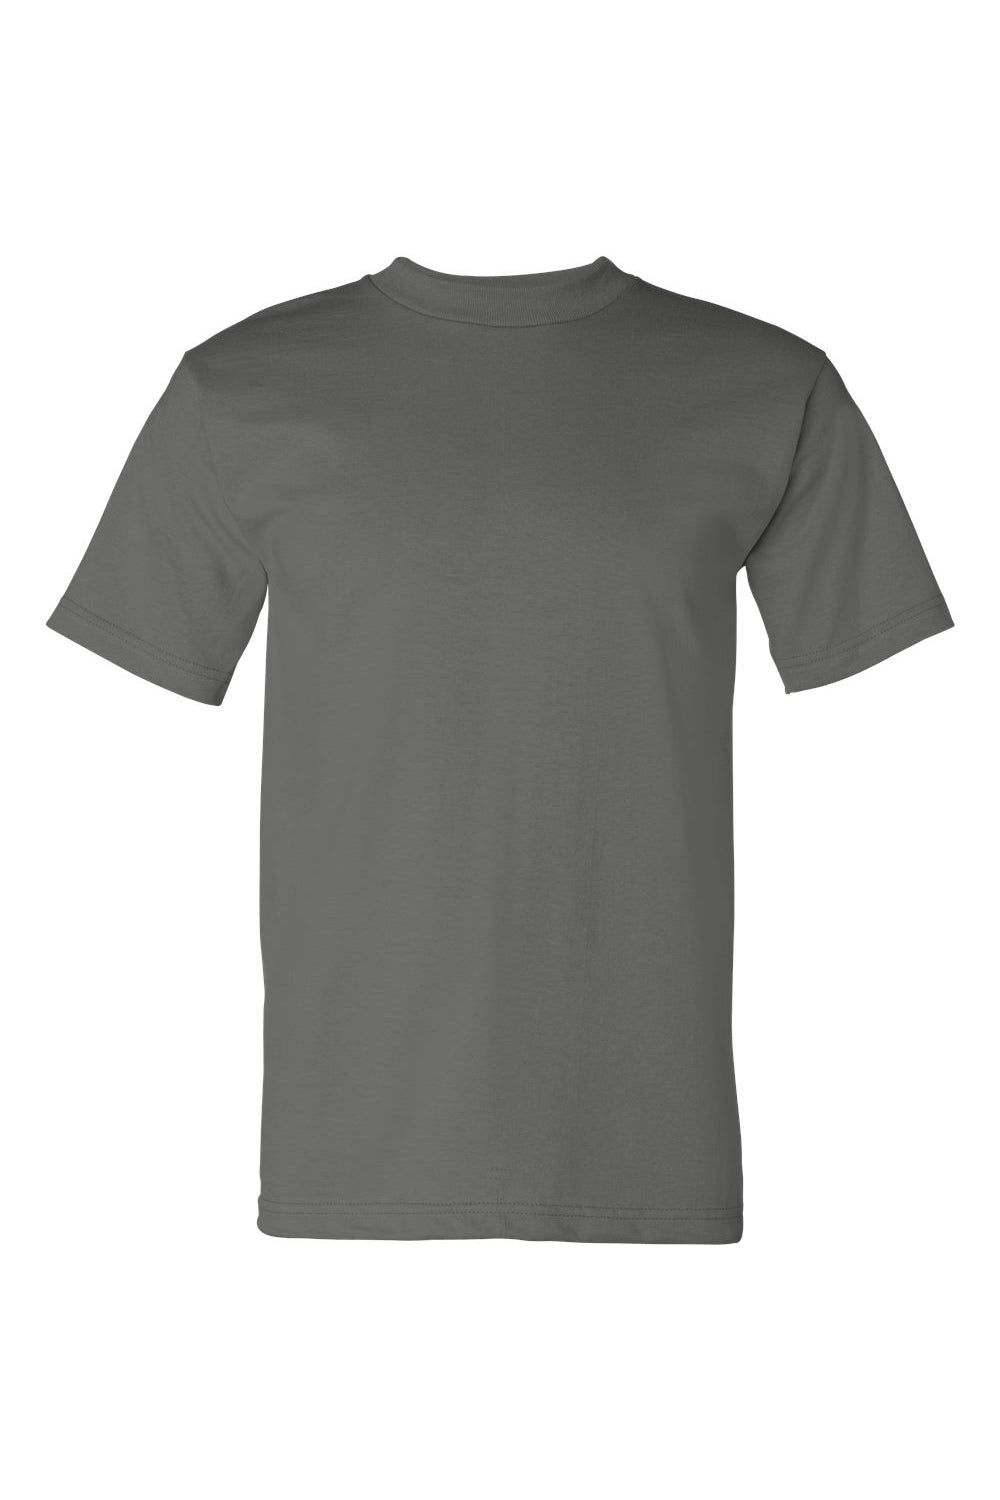 Bayside BA5100 Mens USA Made Short Sleeve Crewneck T-Shirt Charcoal Grey Flat Front